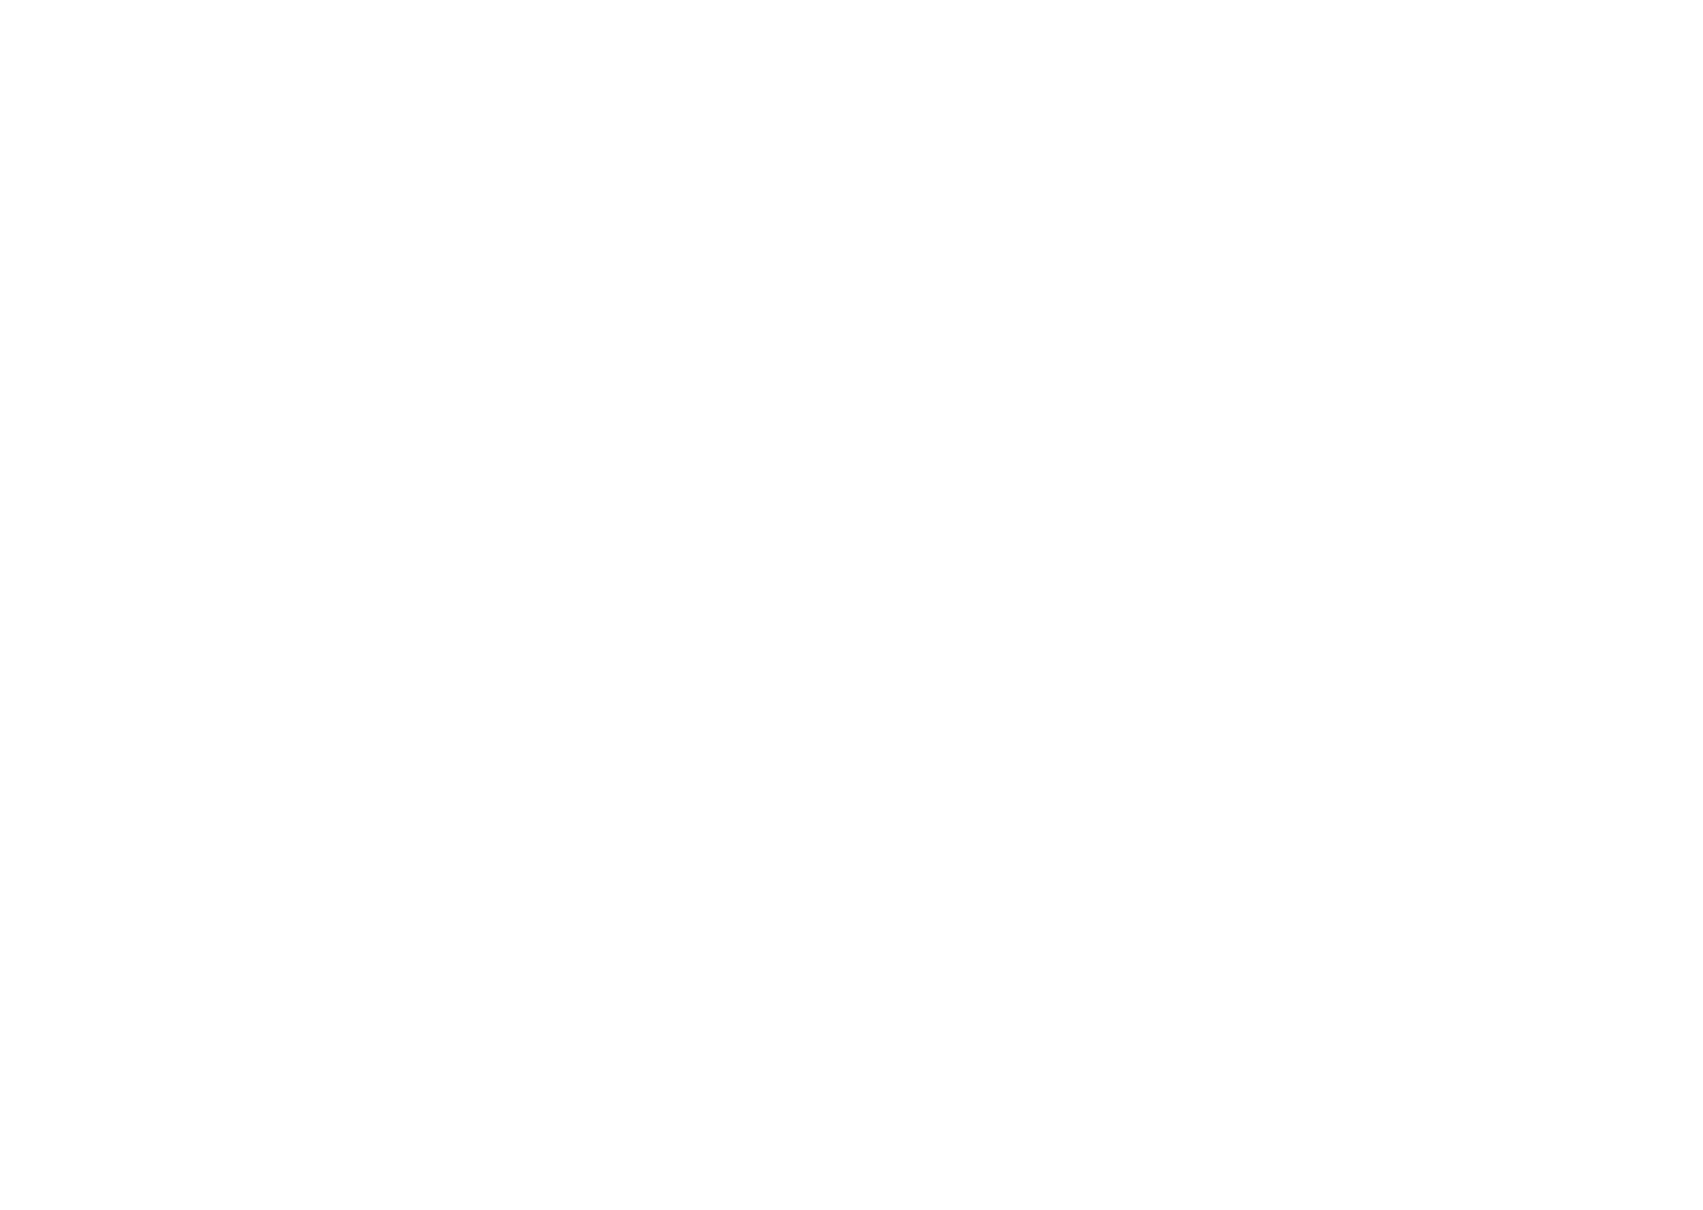 Goblin Works Garage logo